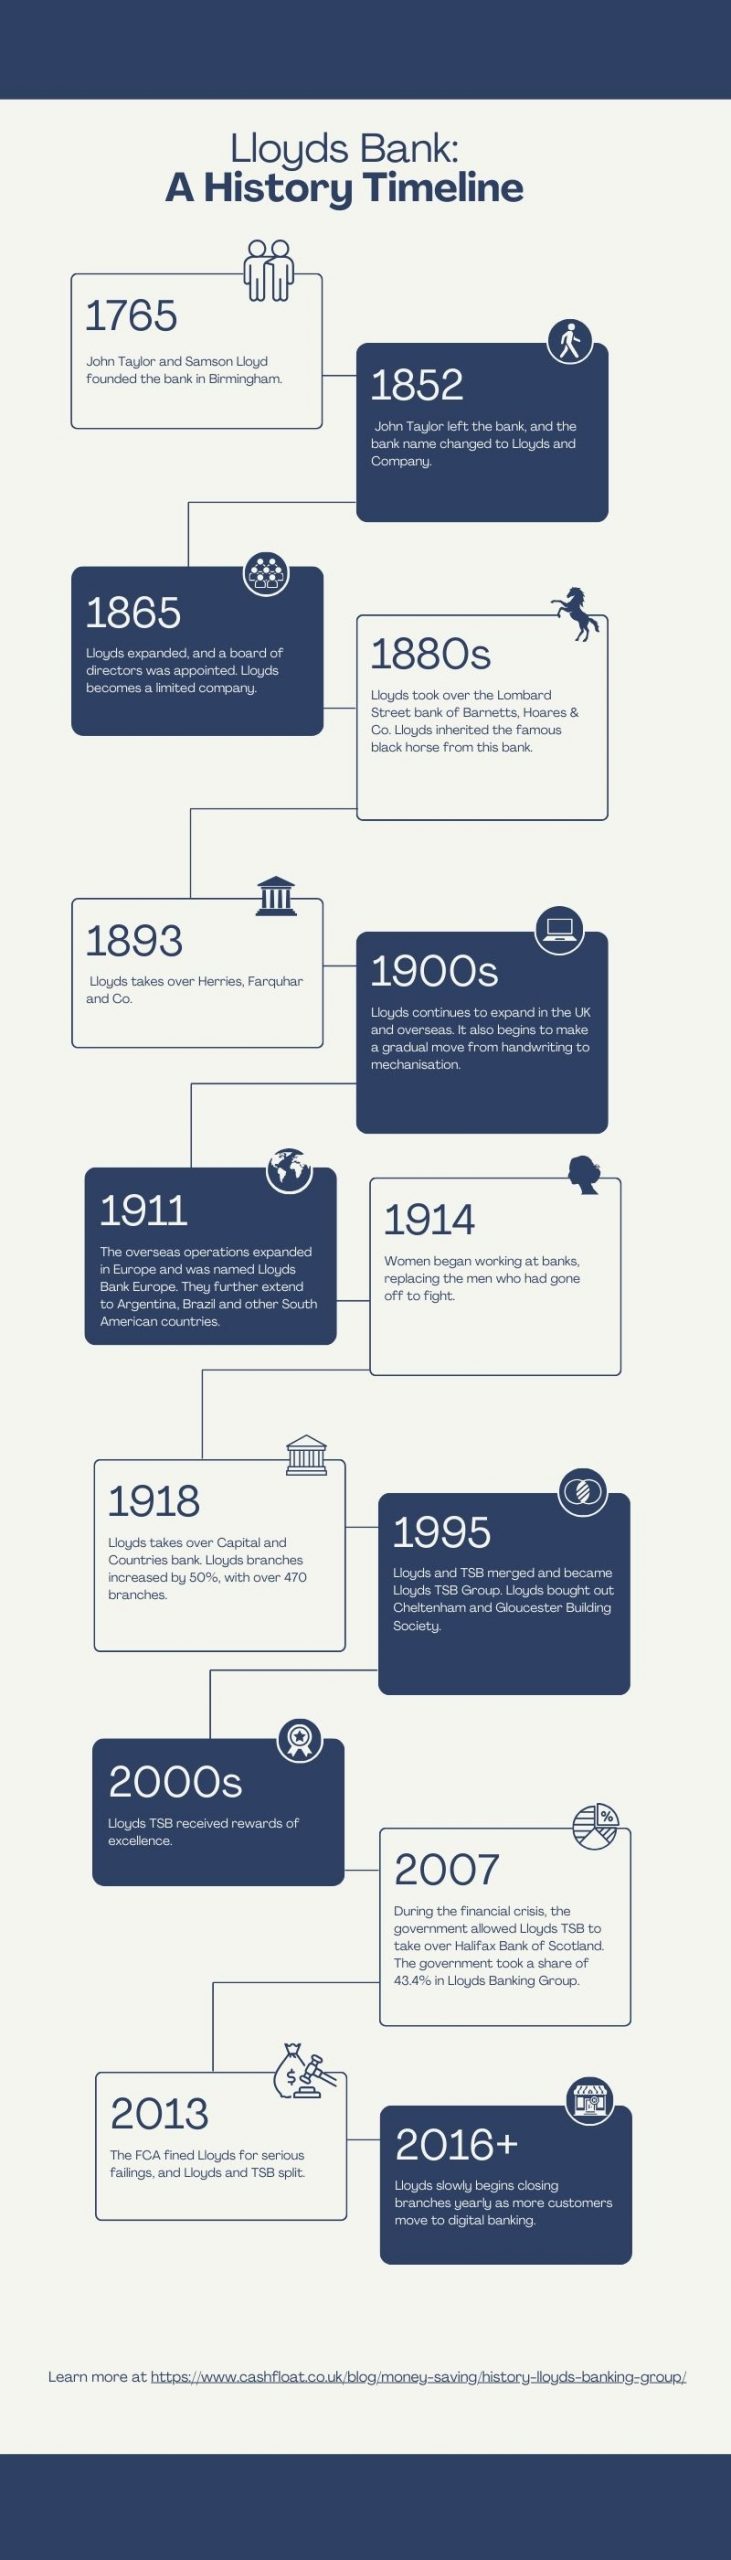 Lloyds bank history timeline - Cashfloat